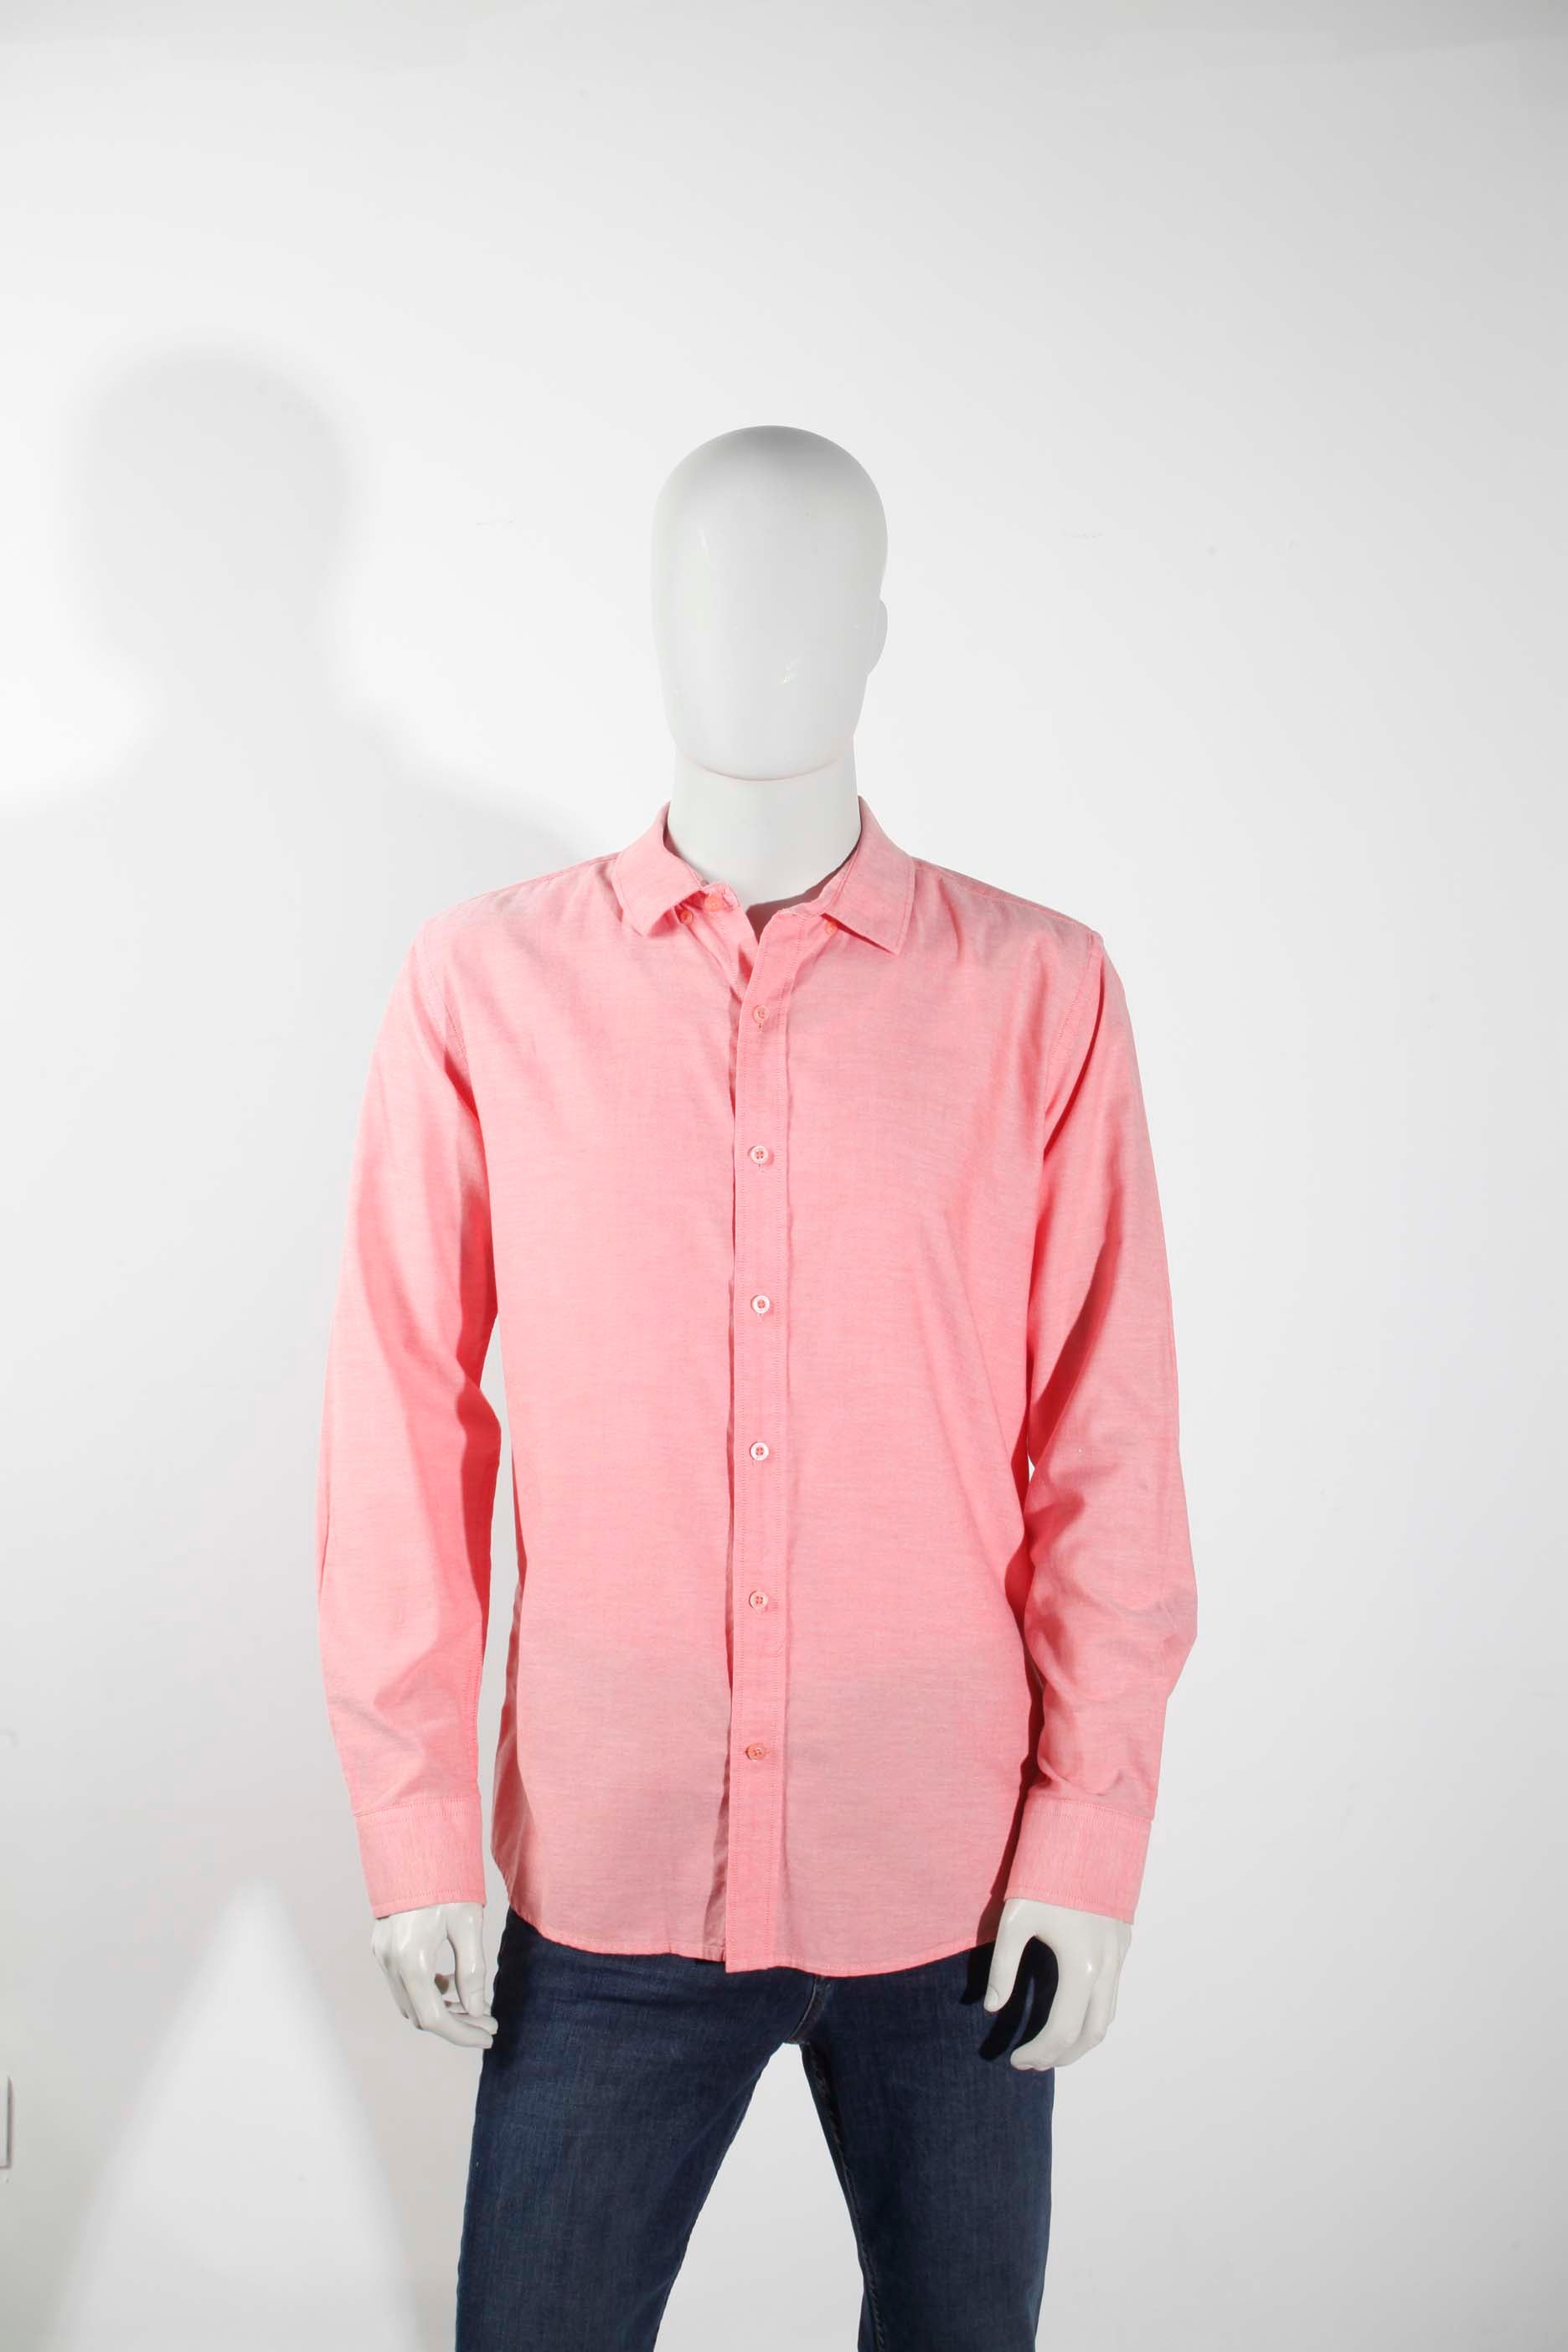 Mens Pink Shirt (Large)